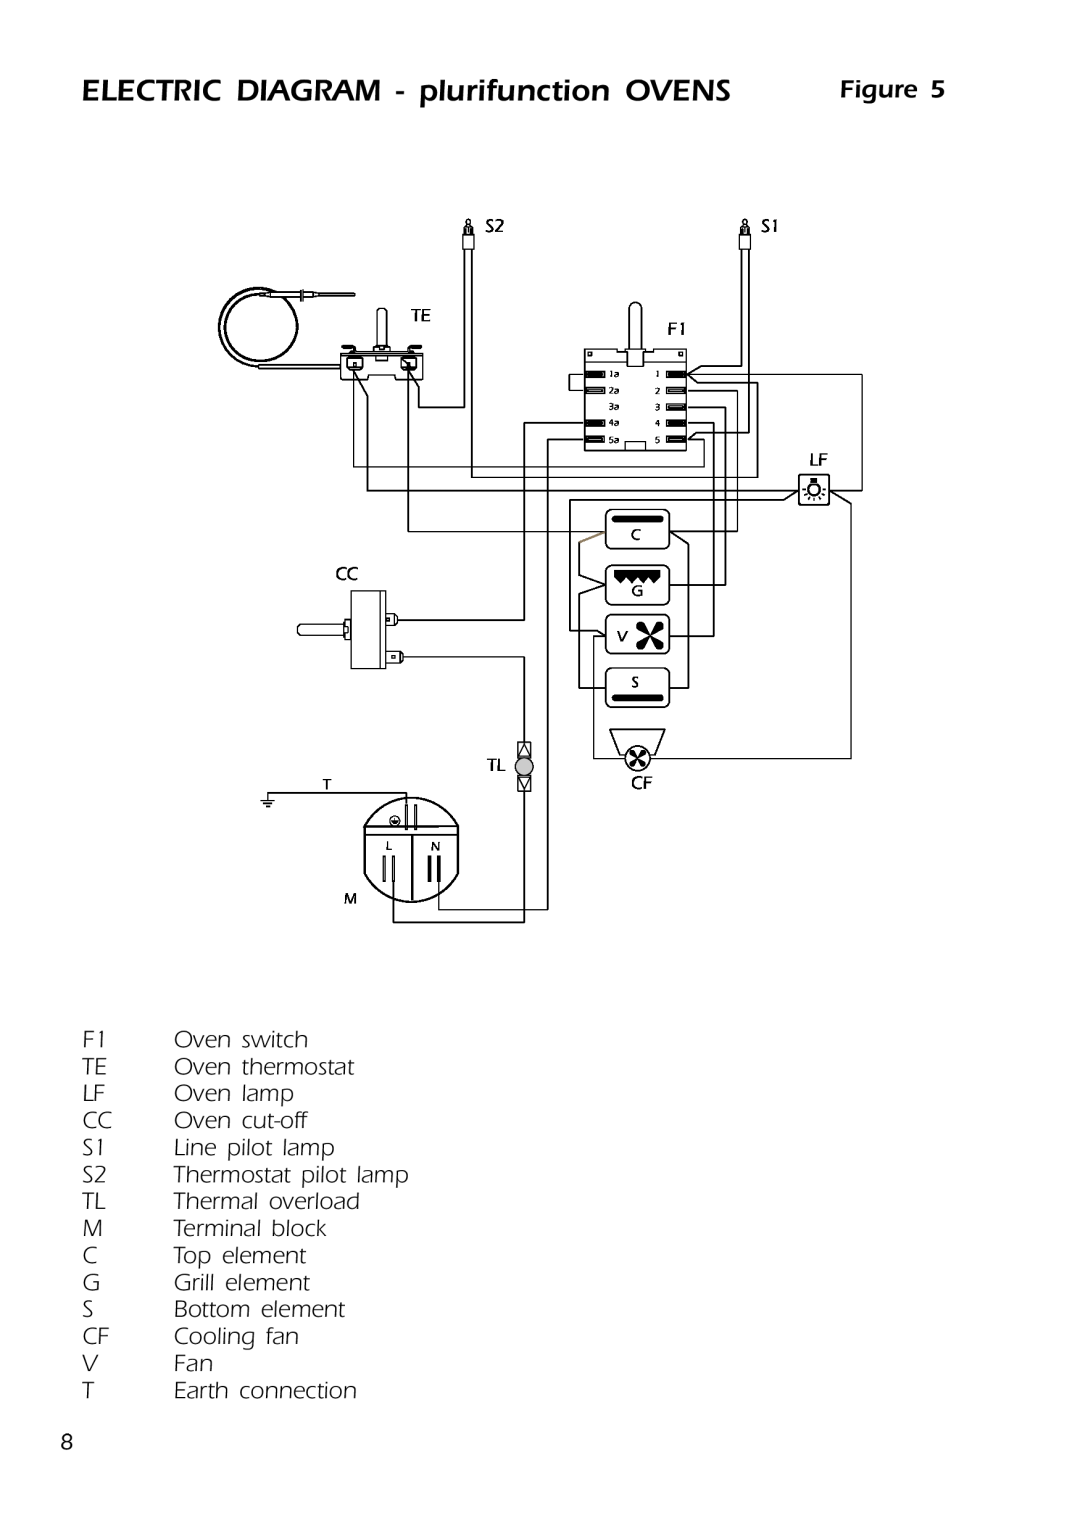 DeLonghi DMFPSII manual ELECTRIC DIAGRAM - plurifunction OVENS 